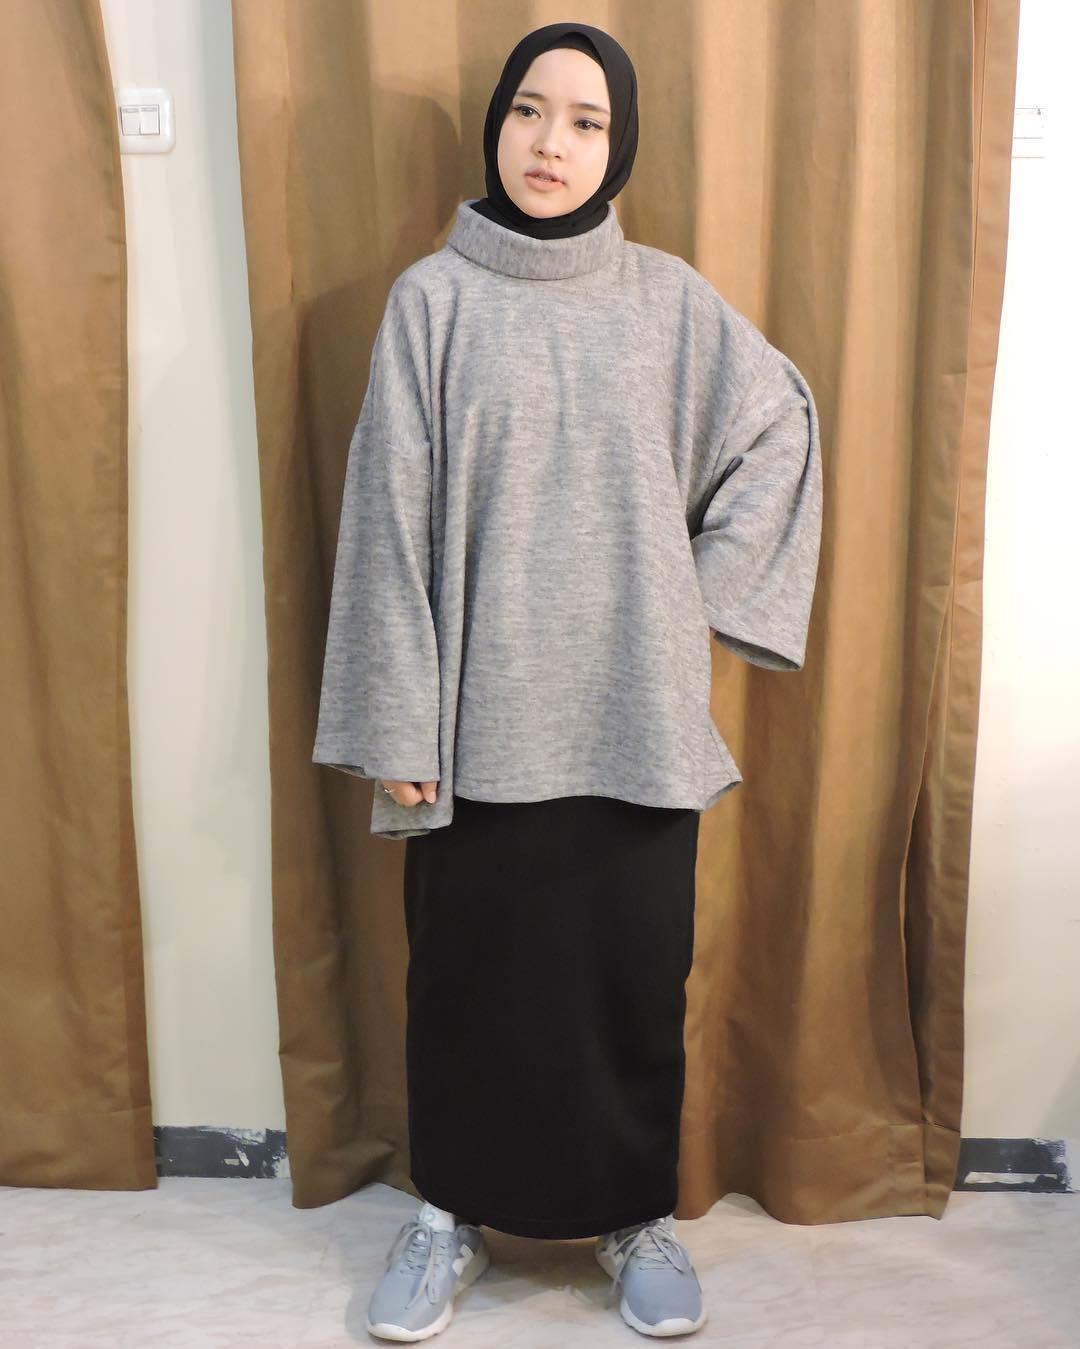  Fashion  Wanita  Hijab Simple  Tutorial Hijab Terbaru